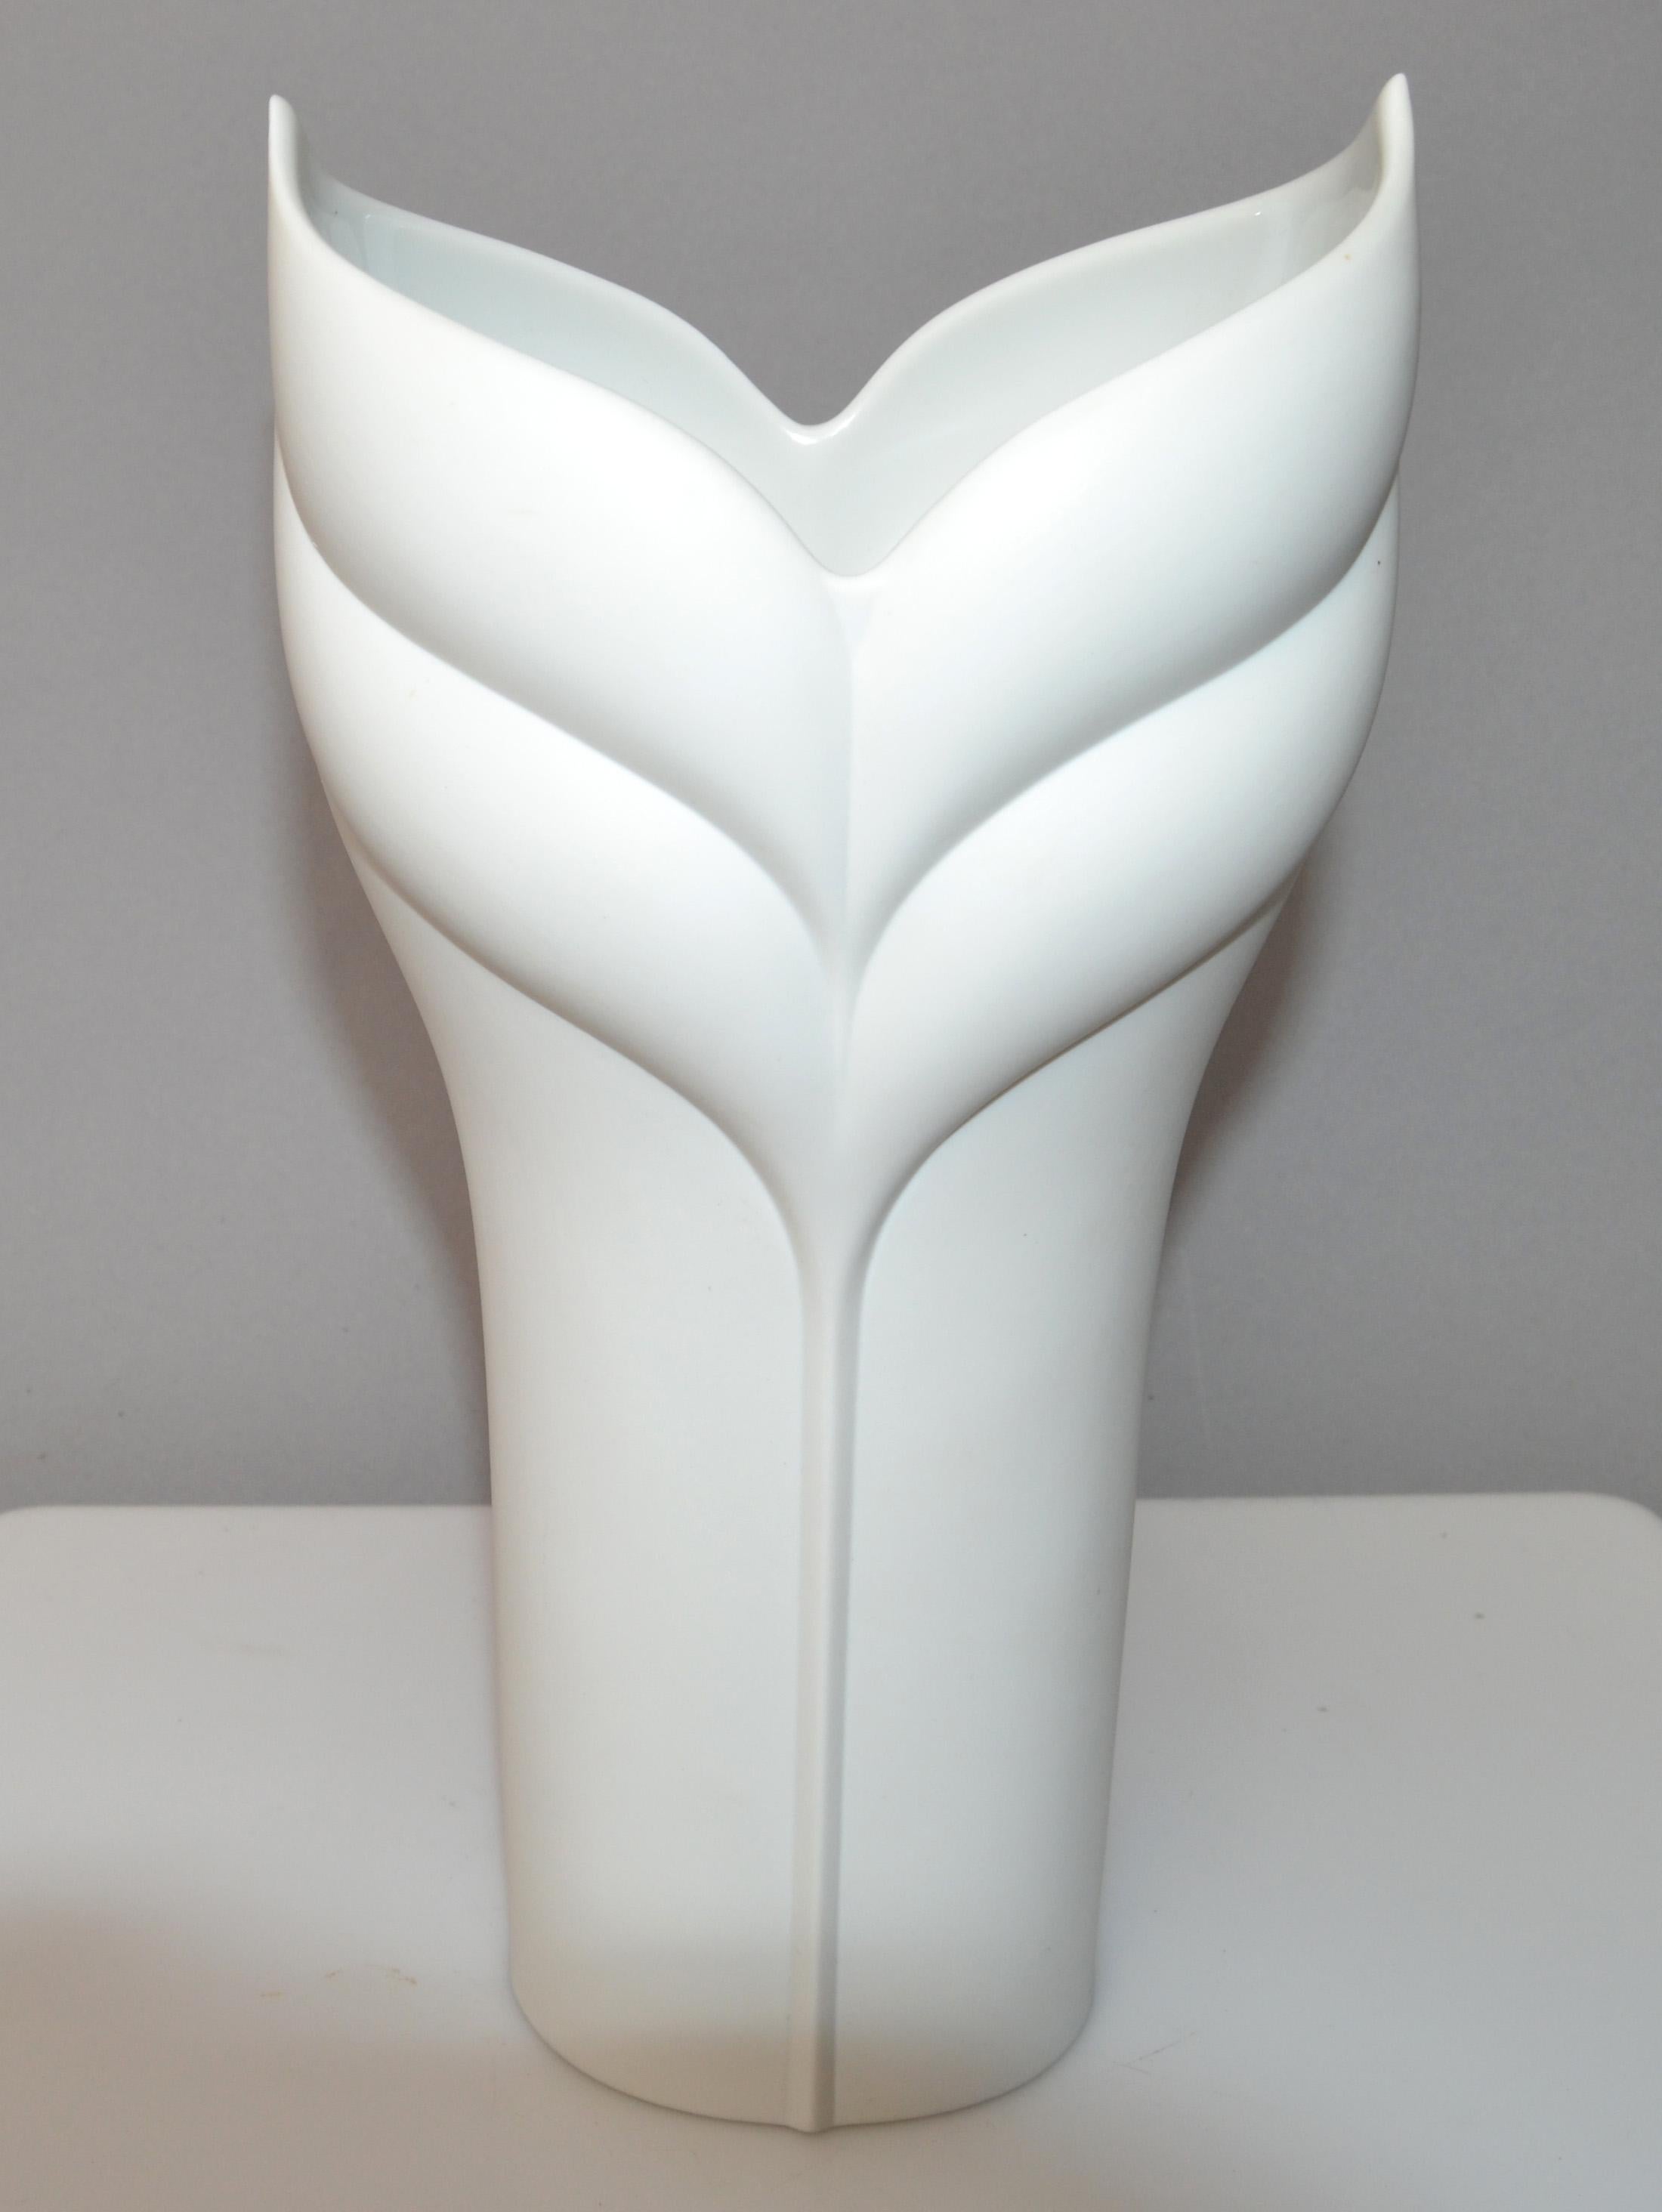 Cala Lily Rosenthal White Bisque Flower Vase Studio-Linie Germany by Uta Feyl 6